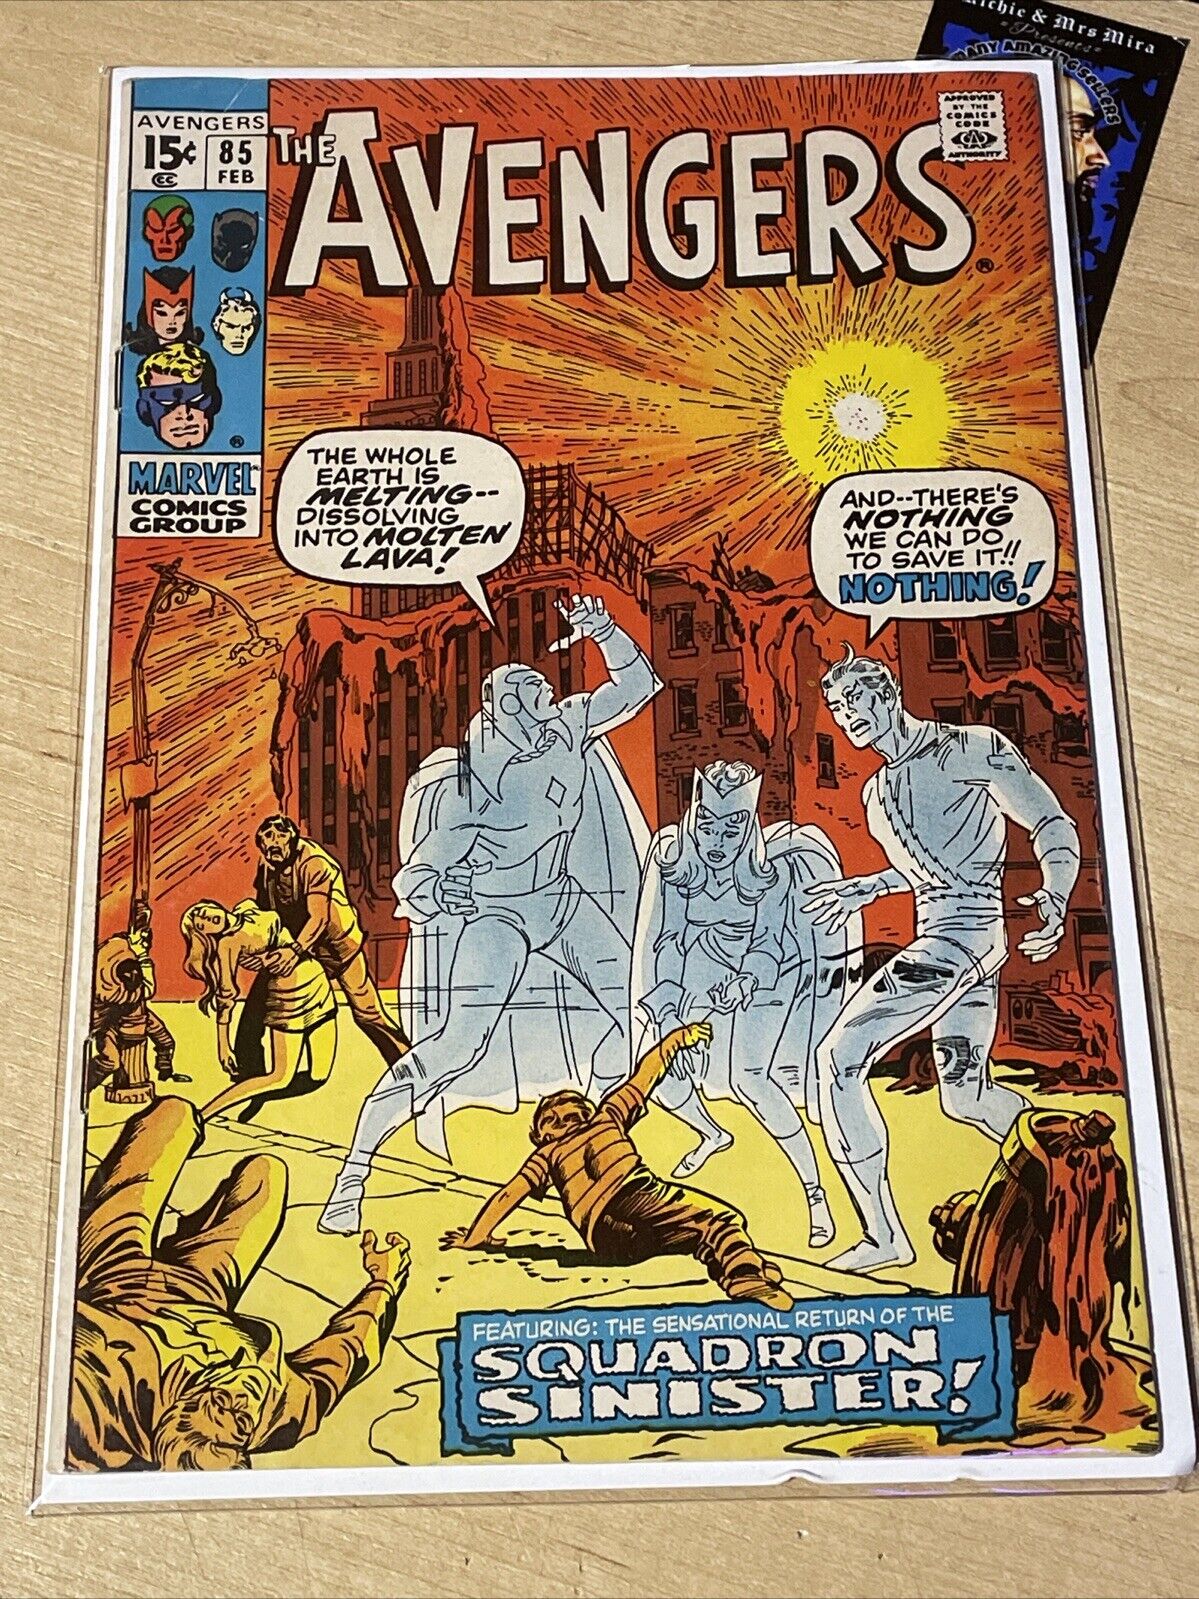 AVENGERS #85 1971 Marvel Comics 1st app of Squadron Supreme